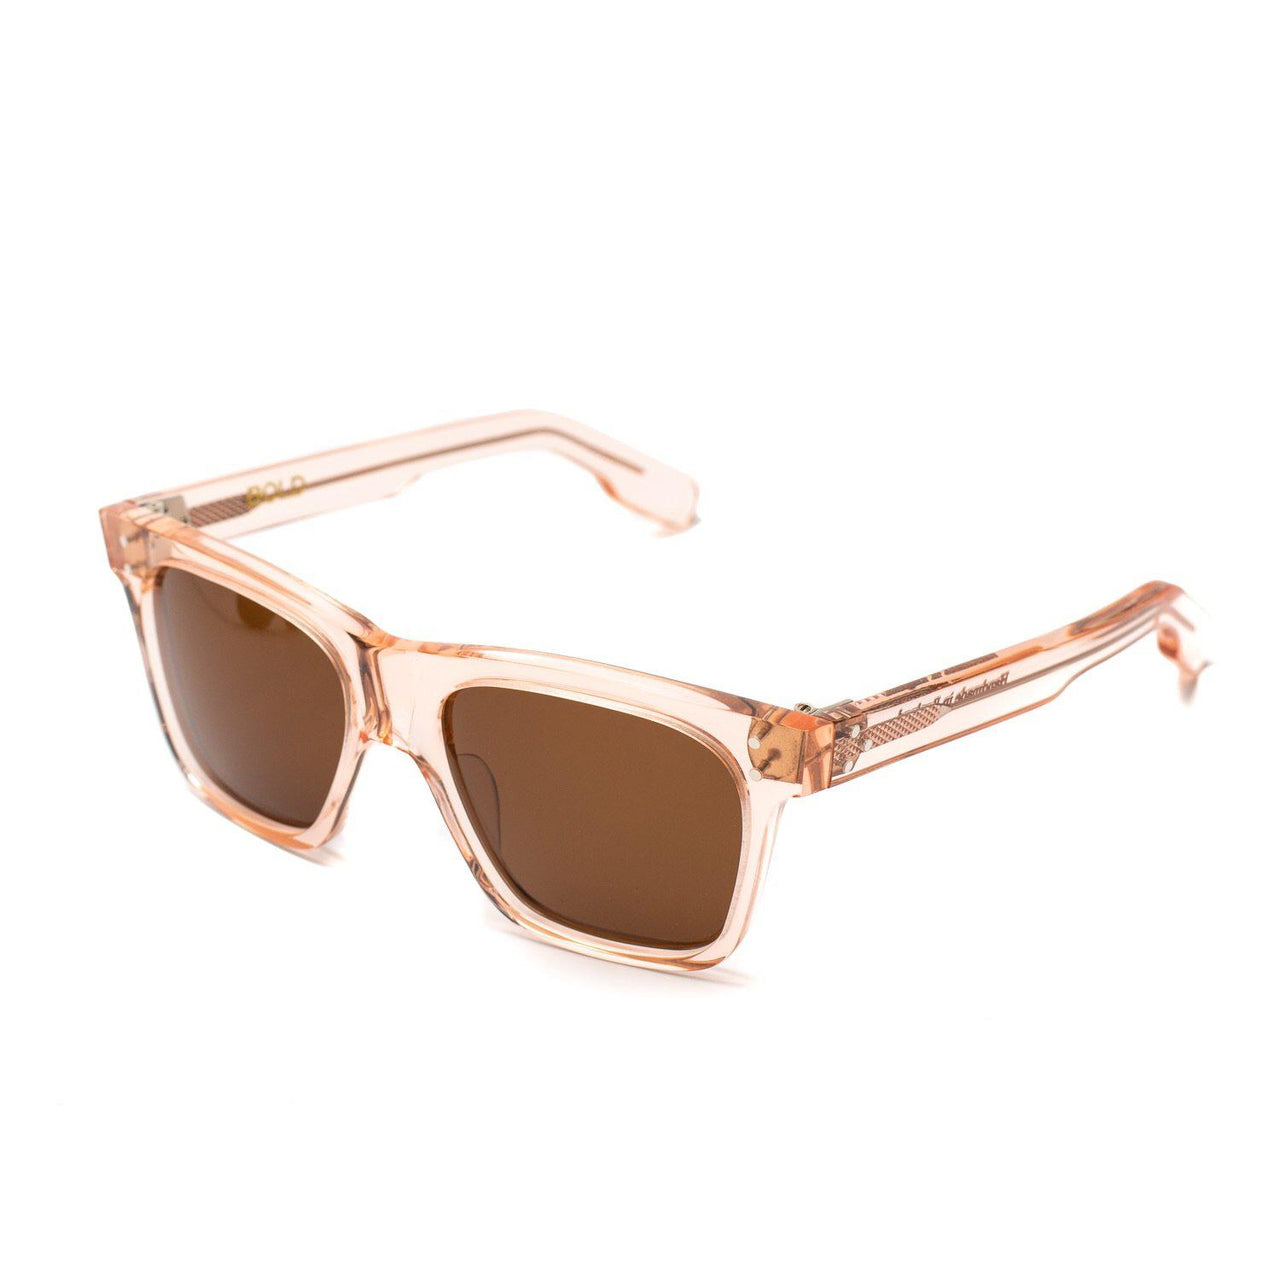 Bold Norton Sunglasses Pink-sunglasses-Clutch Cafe